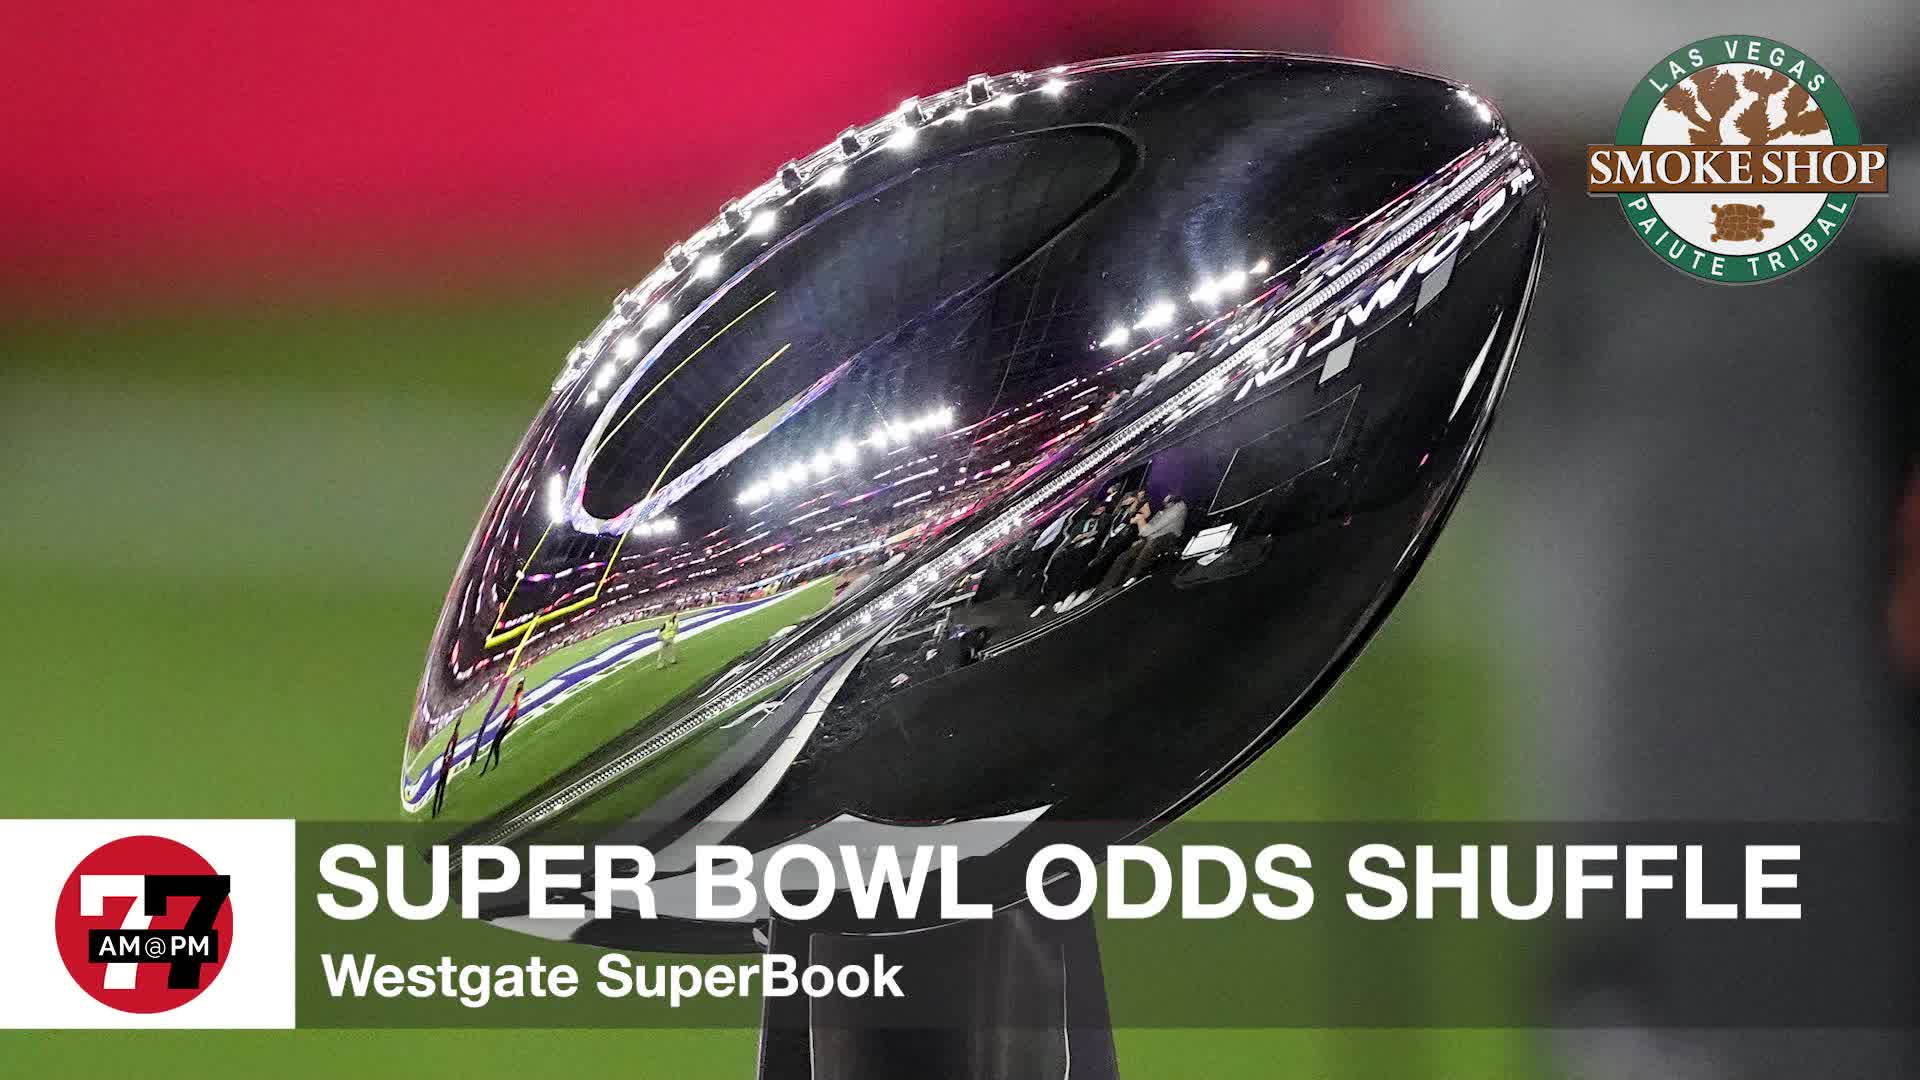 Super Bowl Odds Shuffle